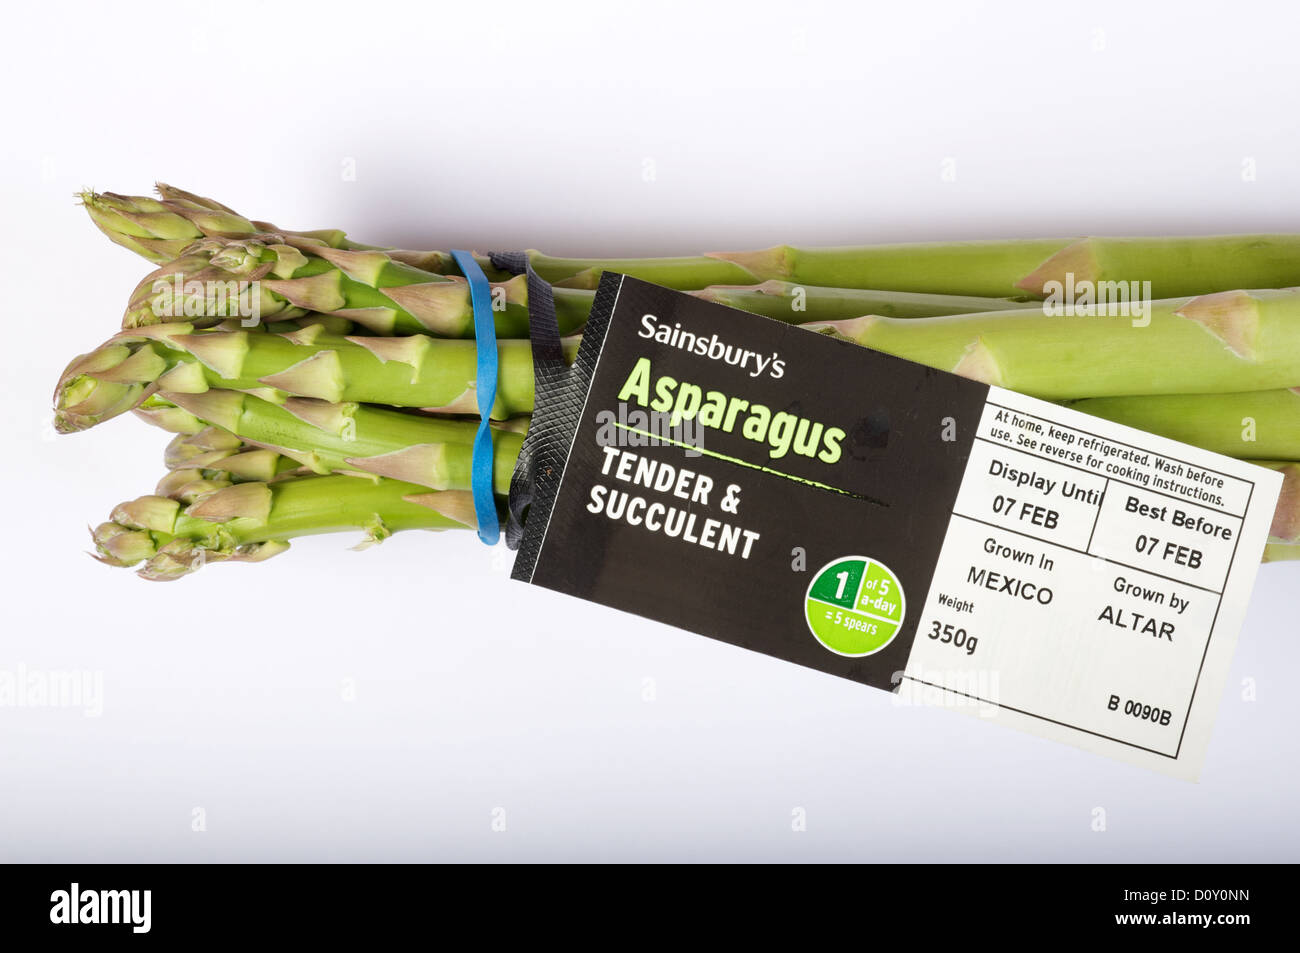 Sainsbury's asparagi importati dal Messico Foto Stock